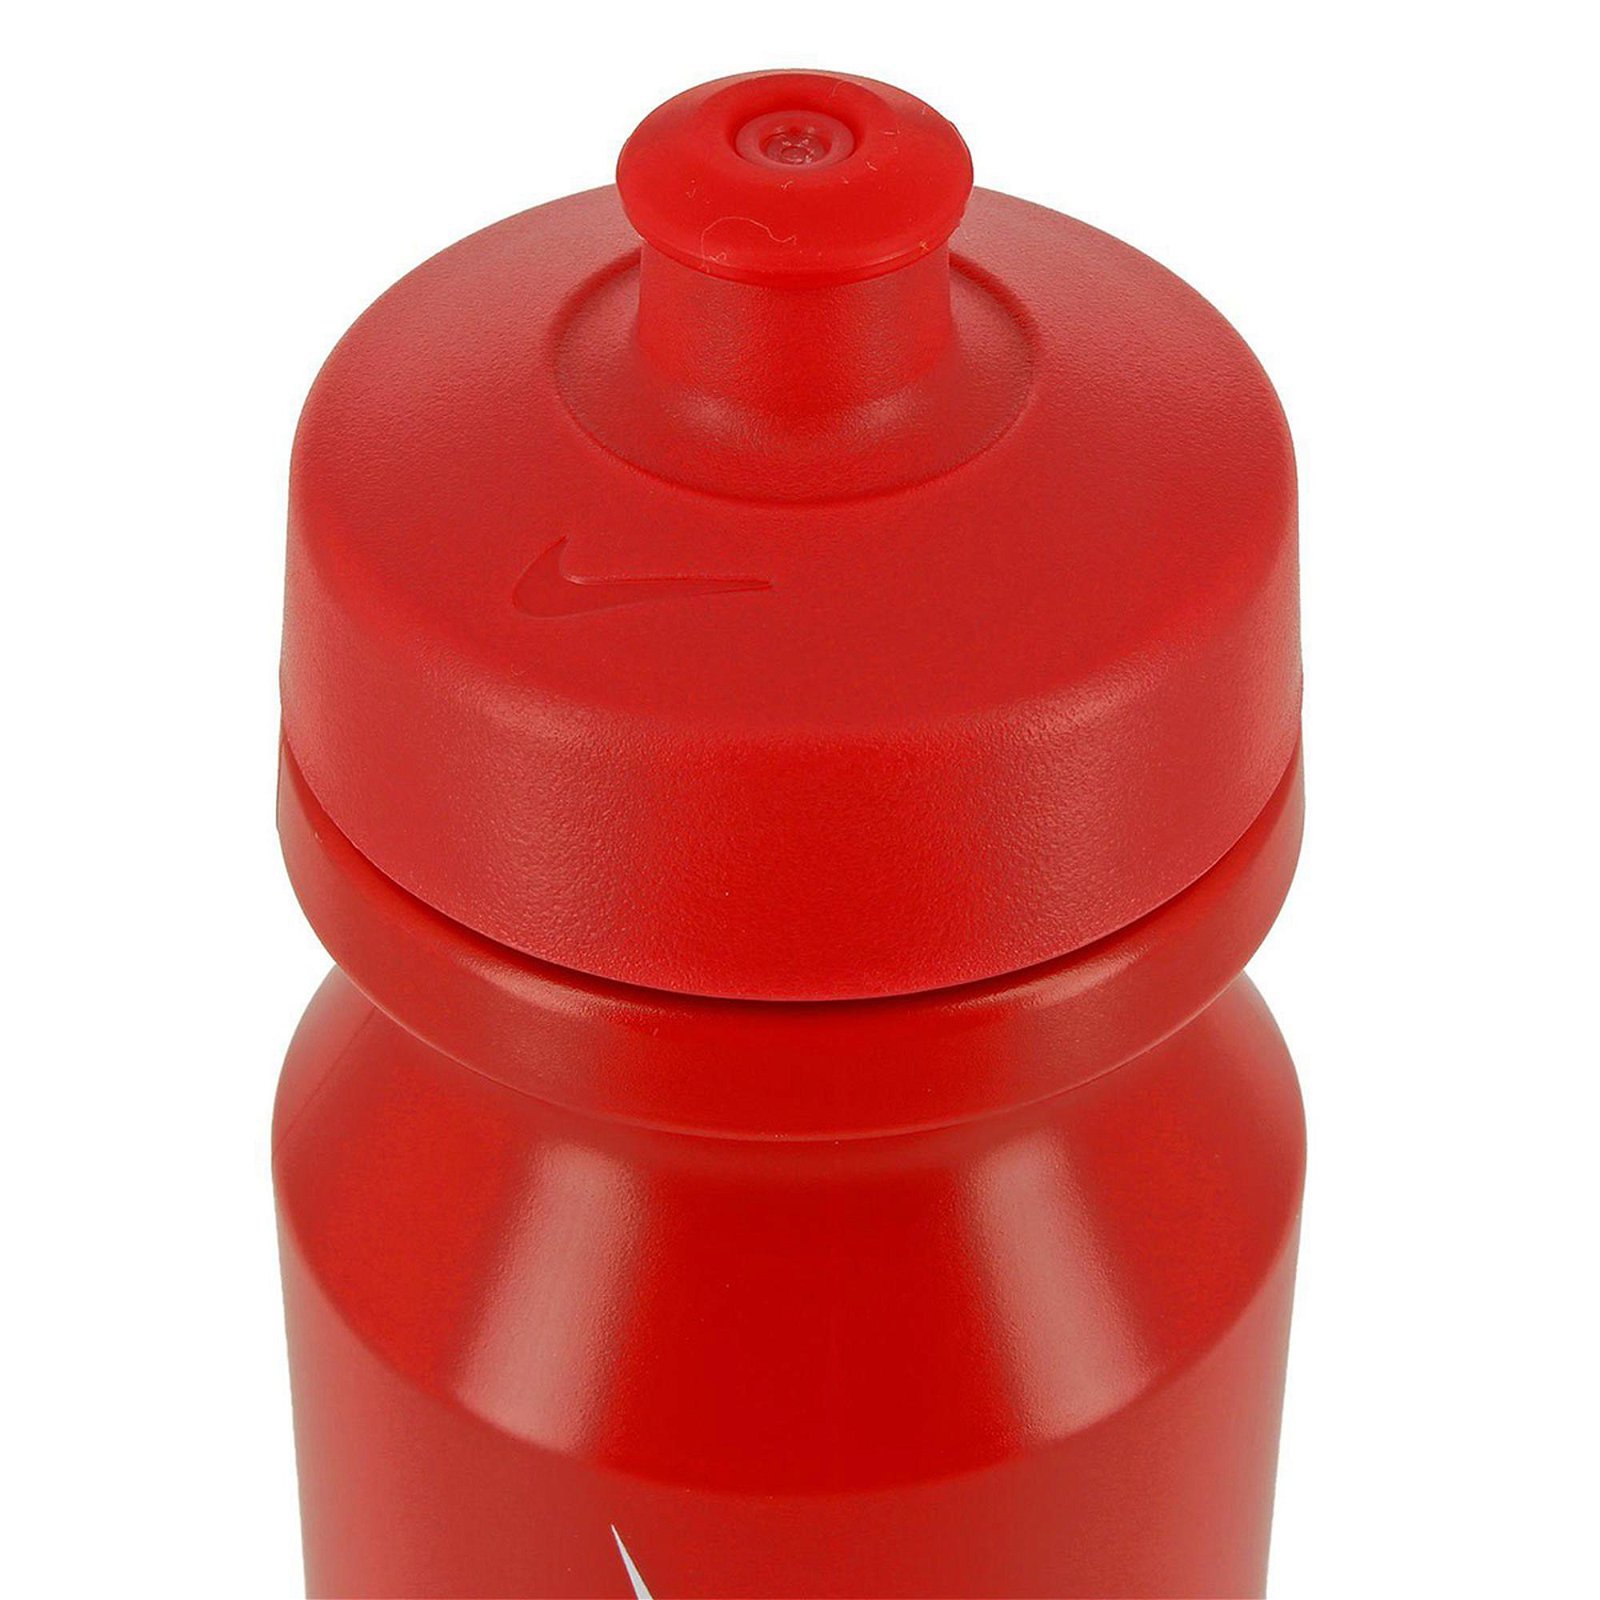 Big Mouth Bottle 2.0 Unisex Kırmızı Suluk N.000.0042.694.22